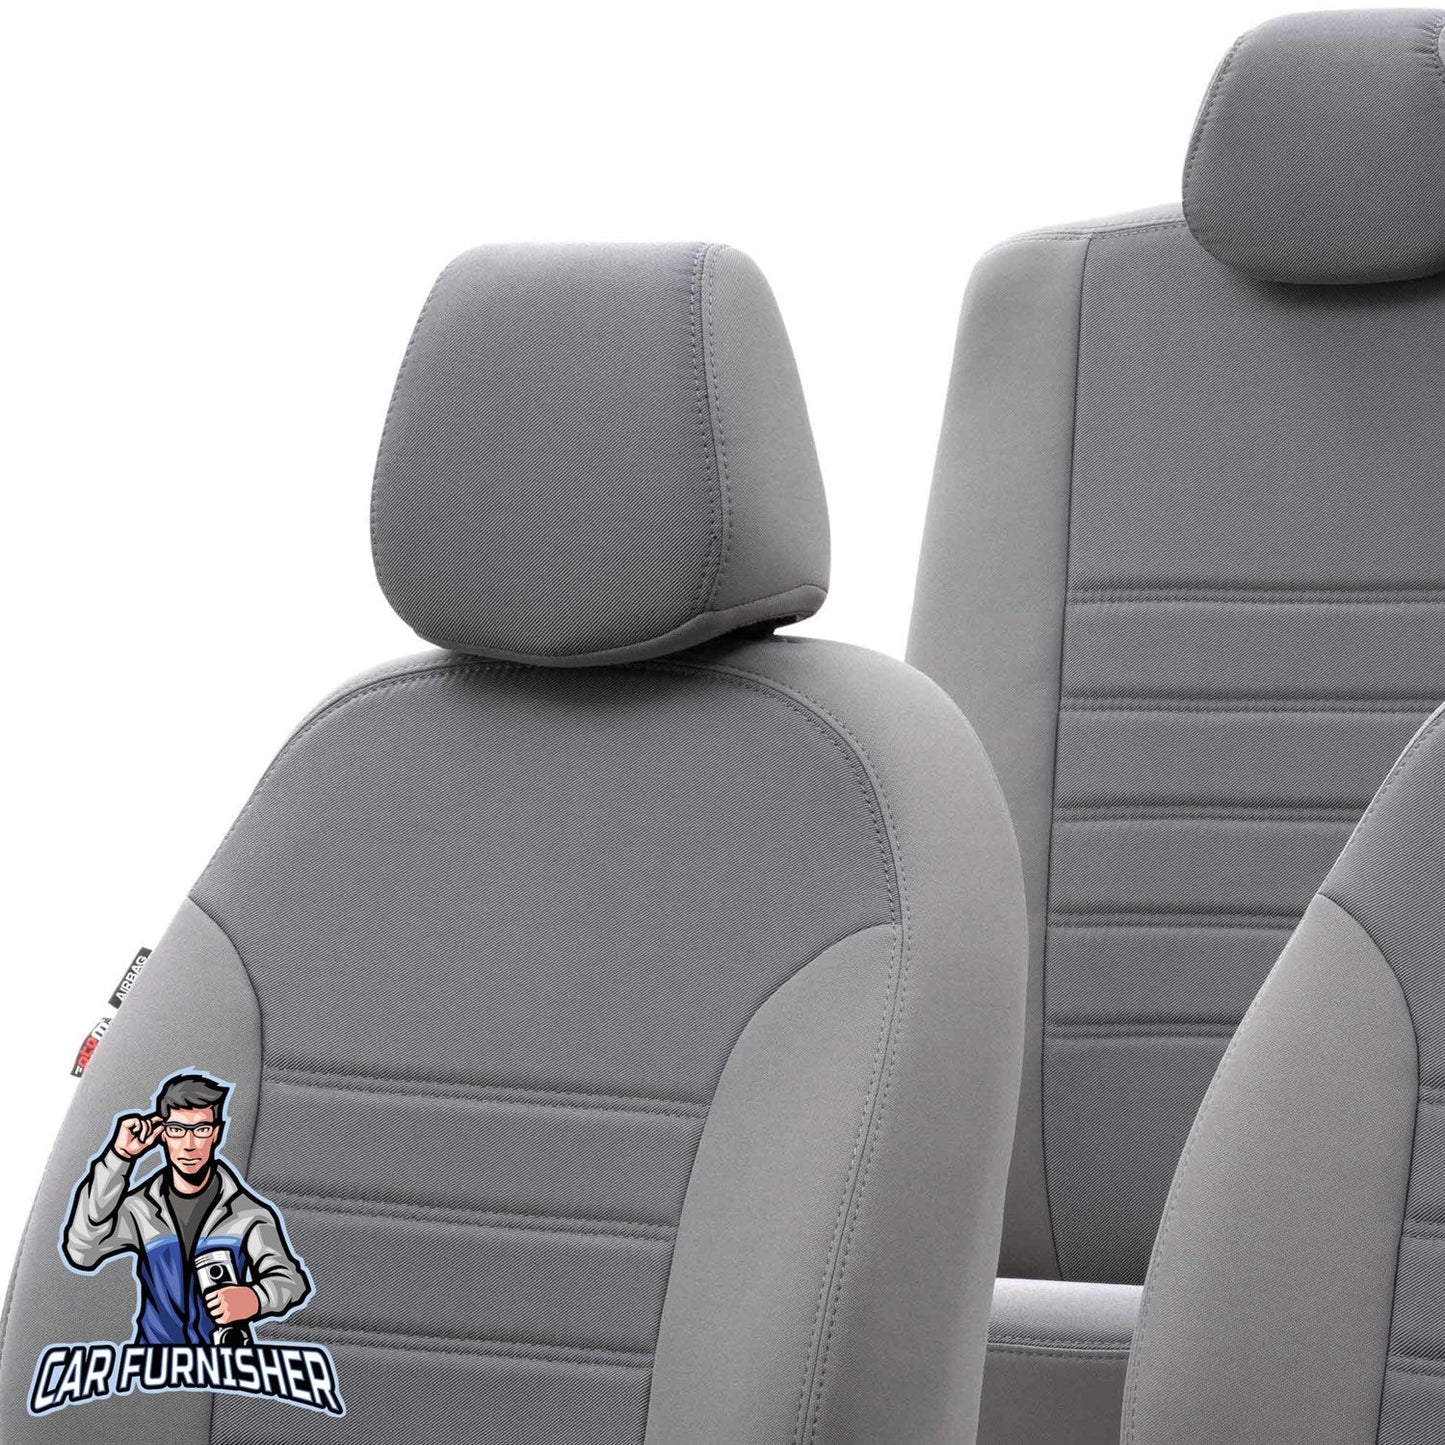 Toyota Proace City Seat Covers Original Jacquard Design Gray Jacquard Fabric